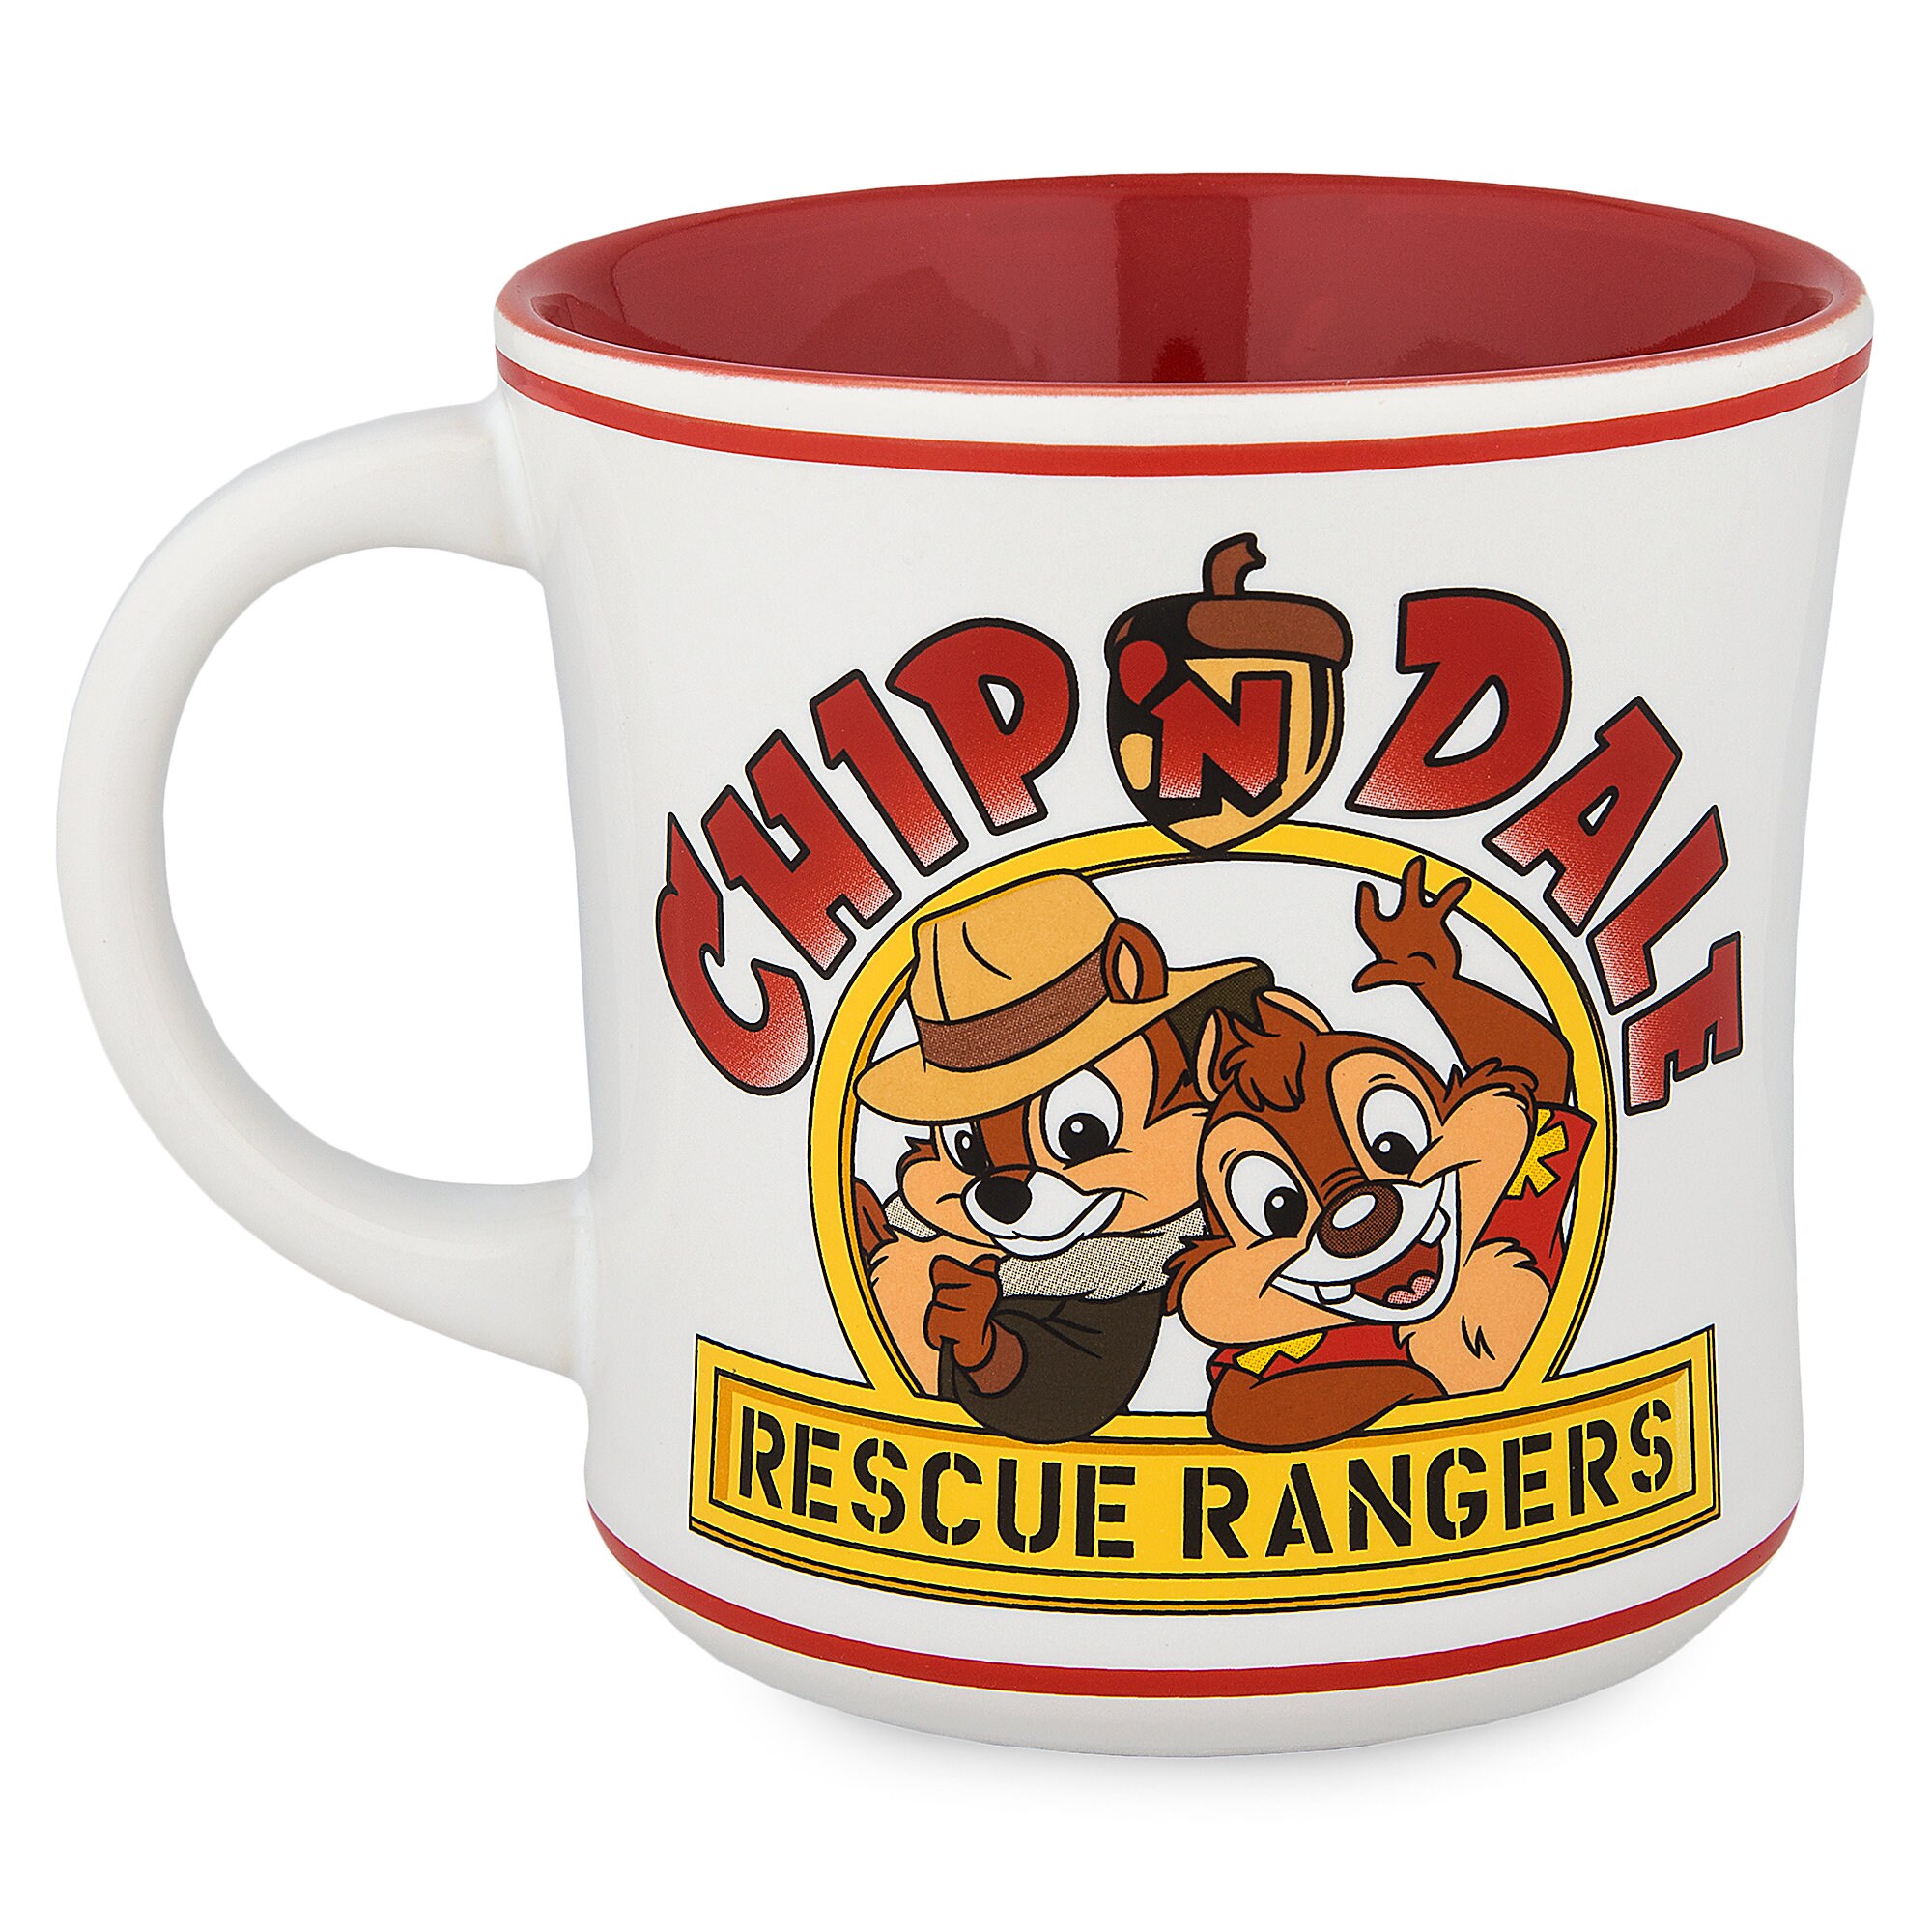 Chip 'n Dale Rescue Rangers Mug